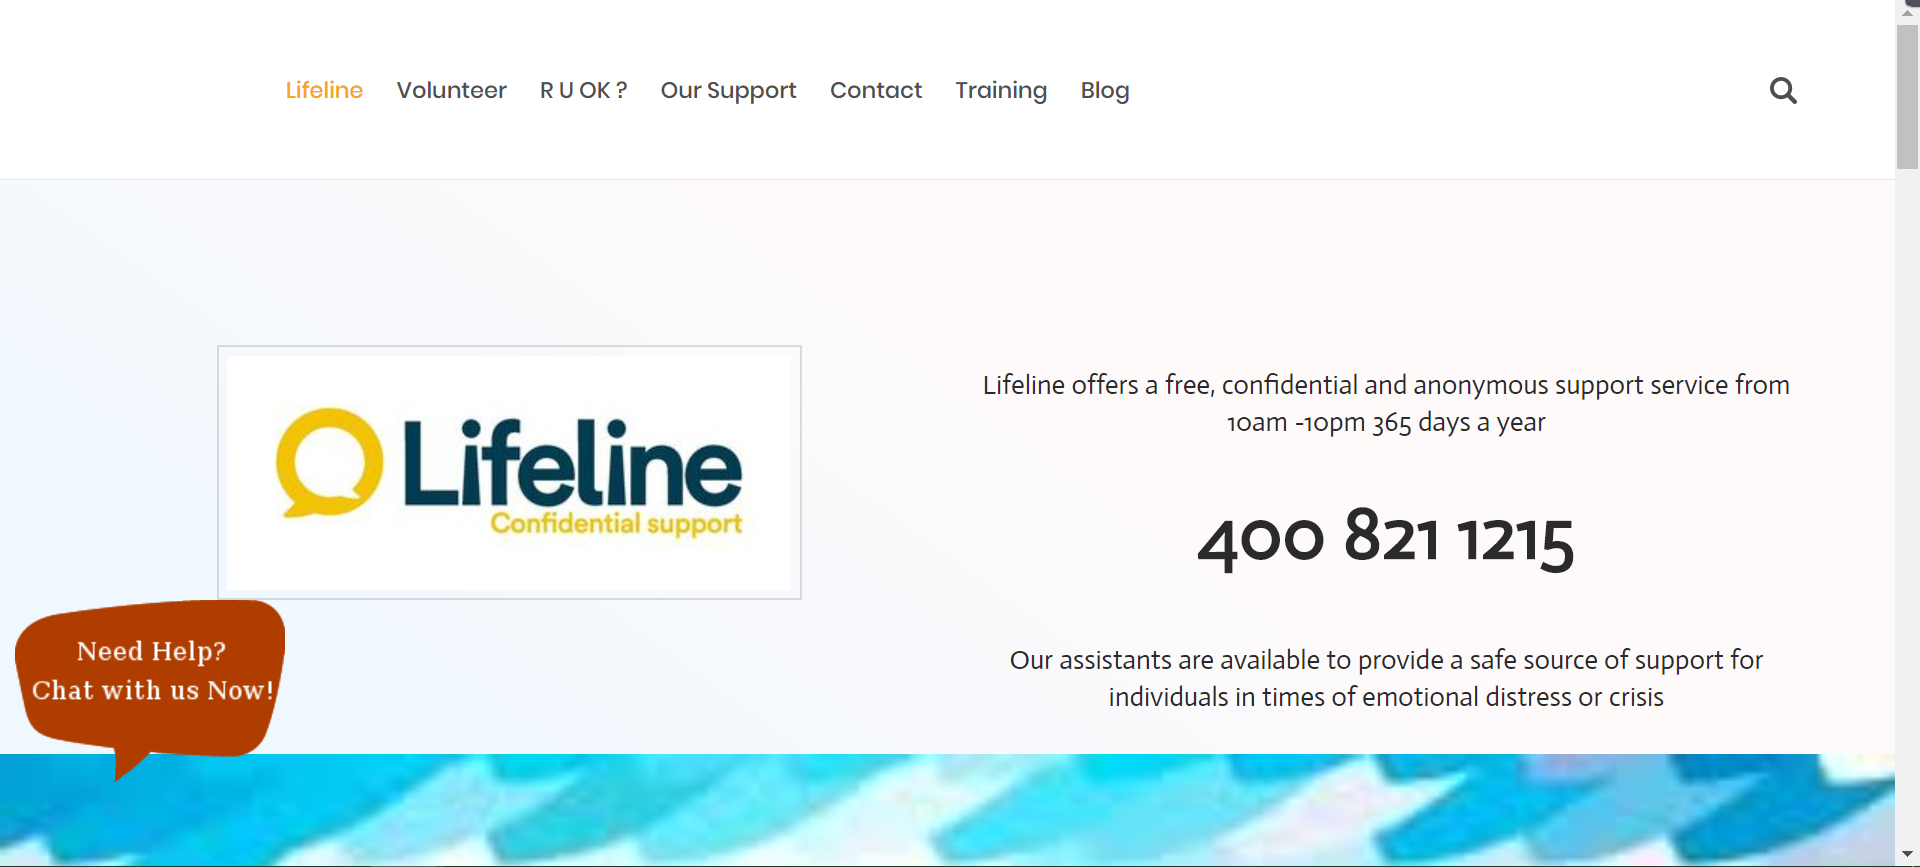 lifeline.com